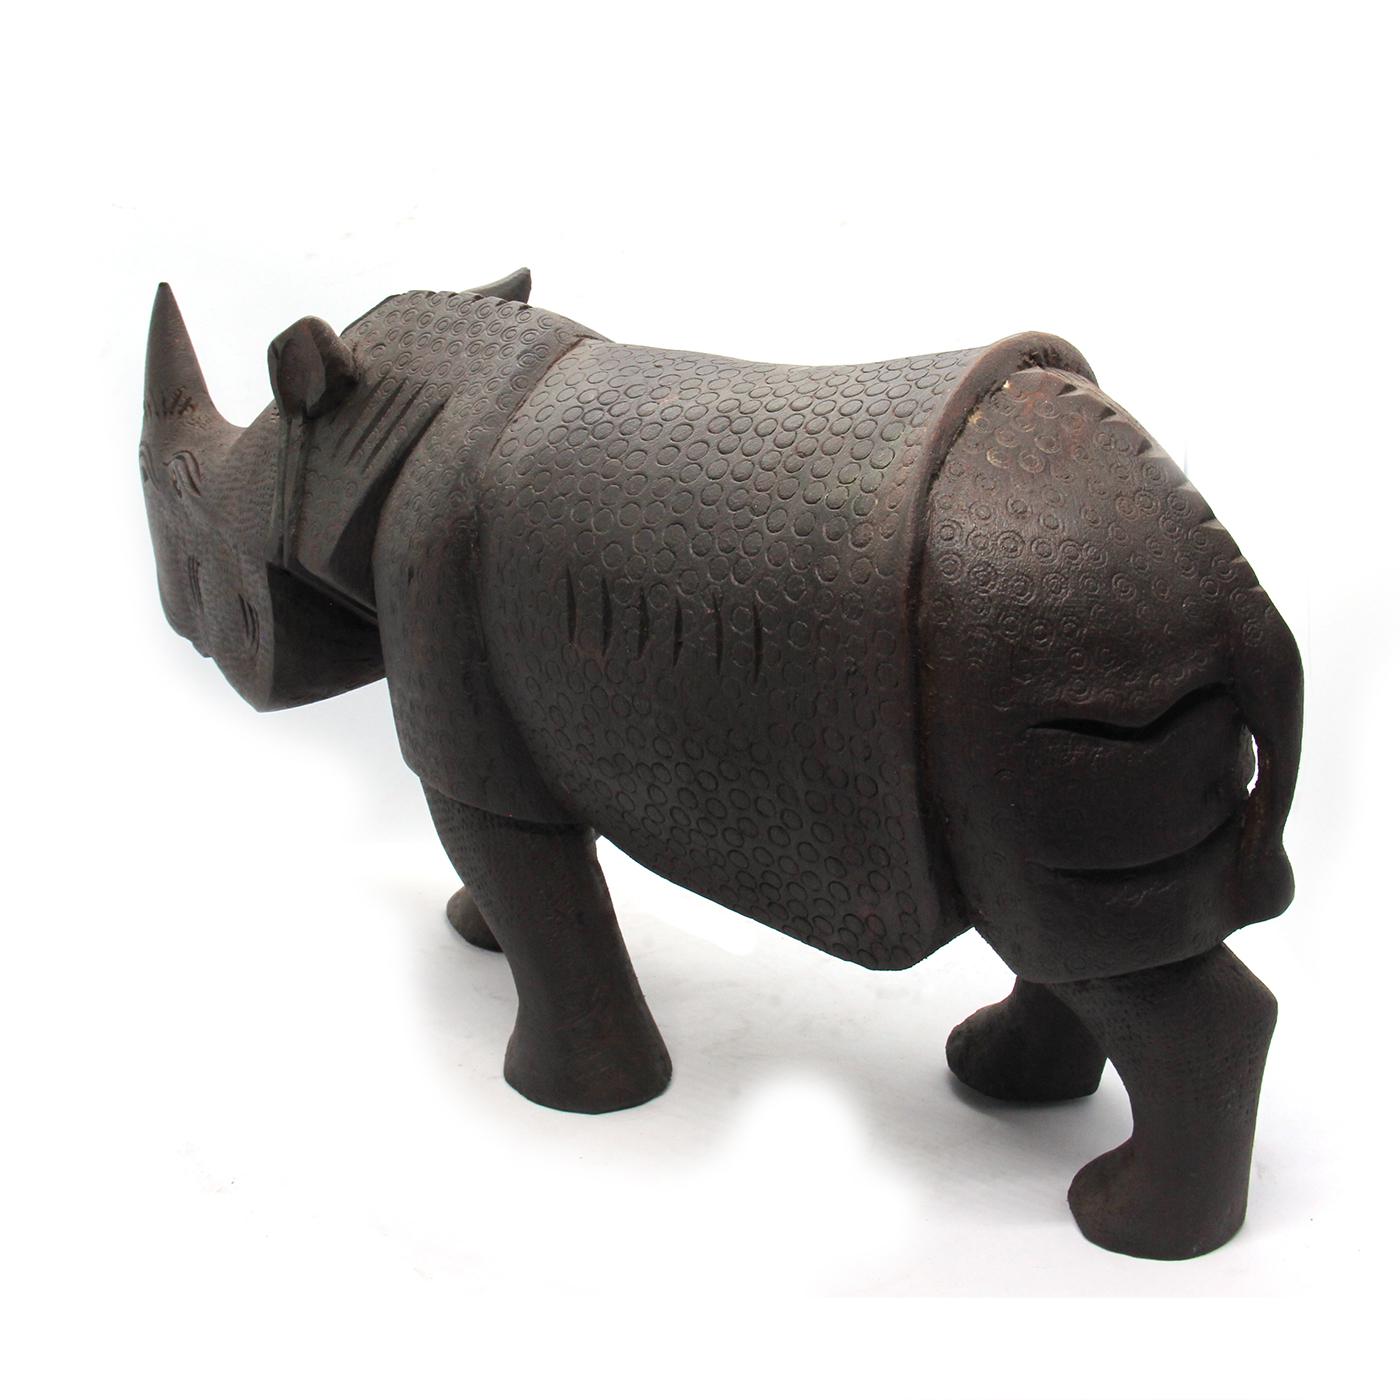 Изображение 4307 Статуэтка носорога 40х20х12